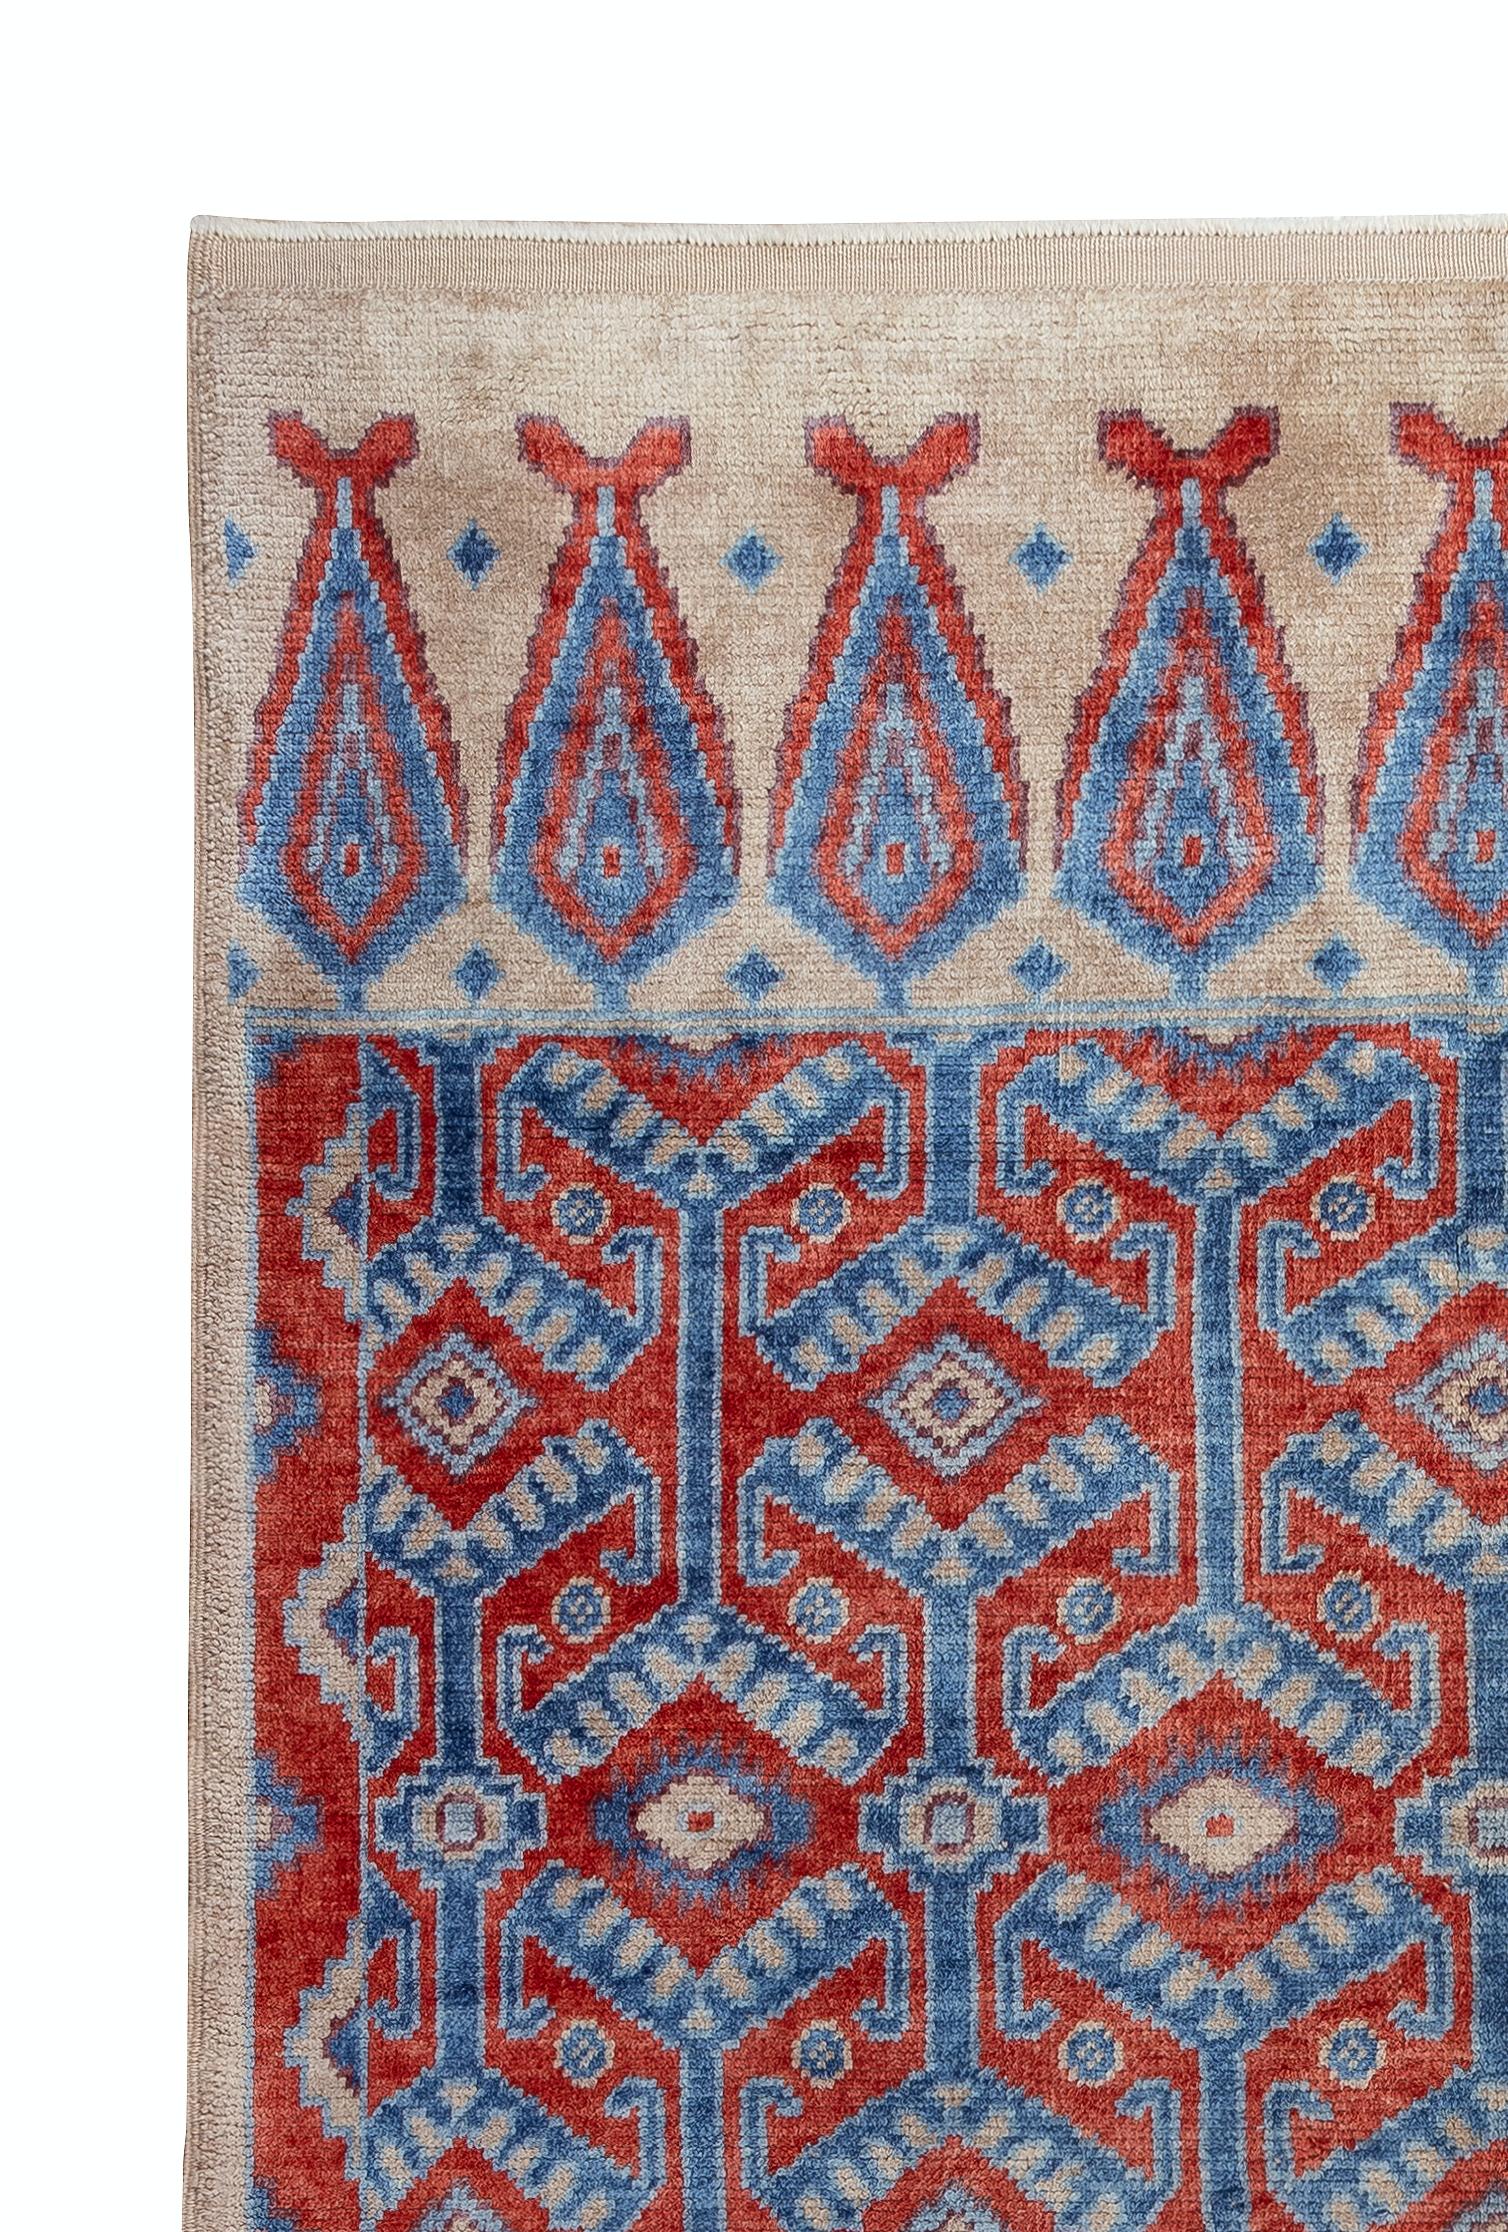 custom organic wool rugs